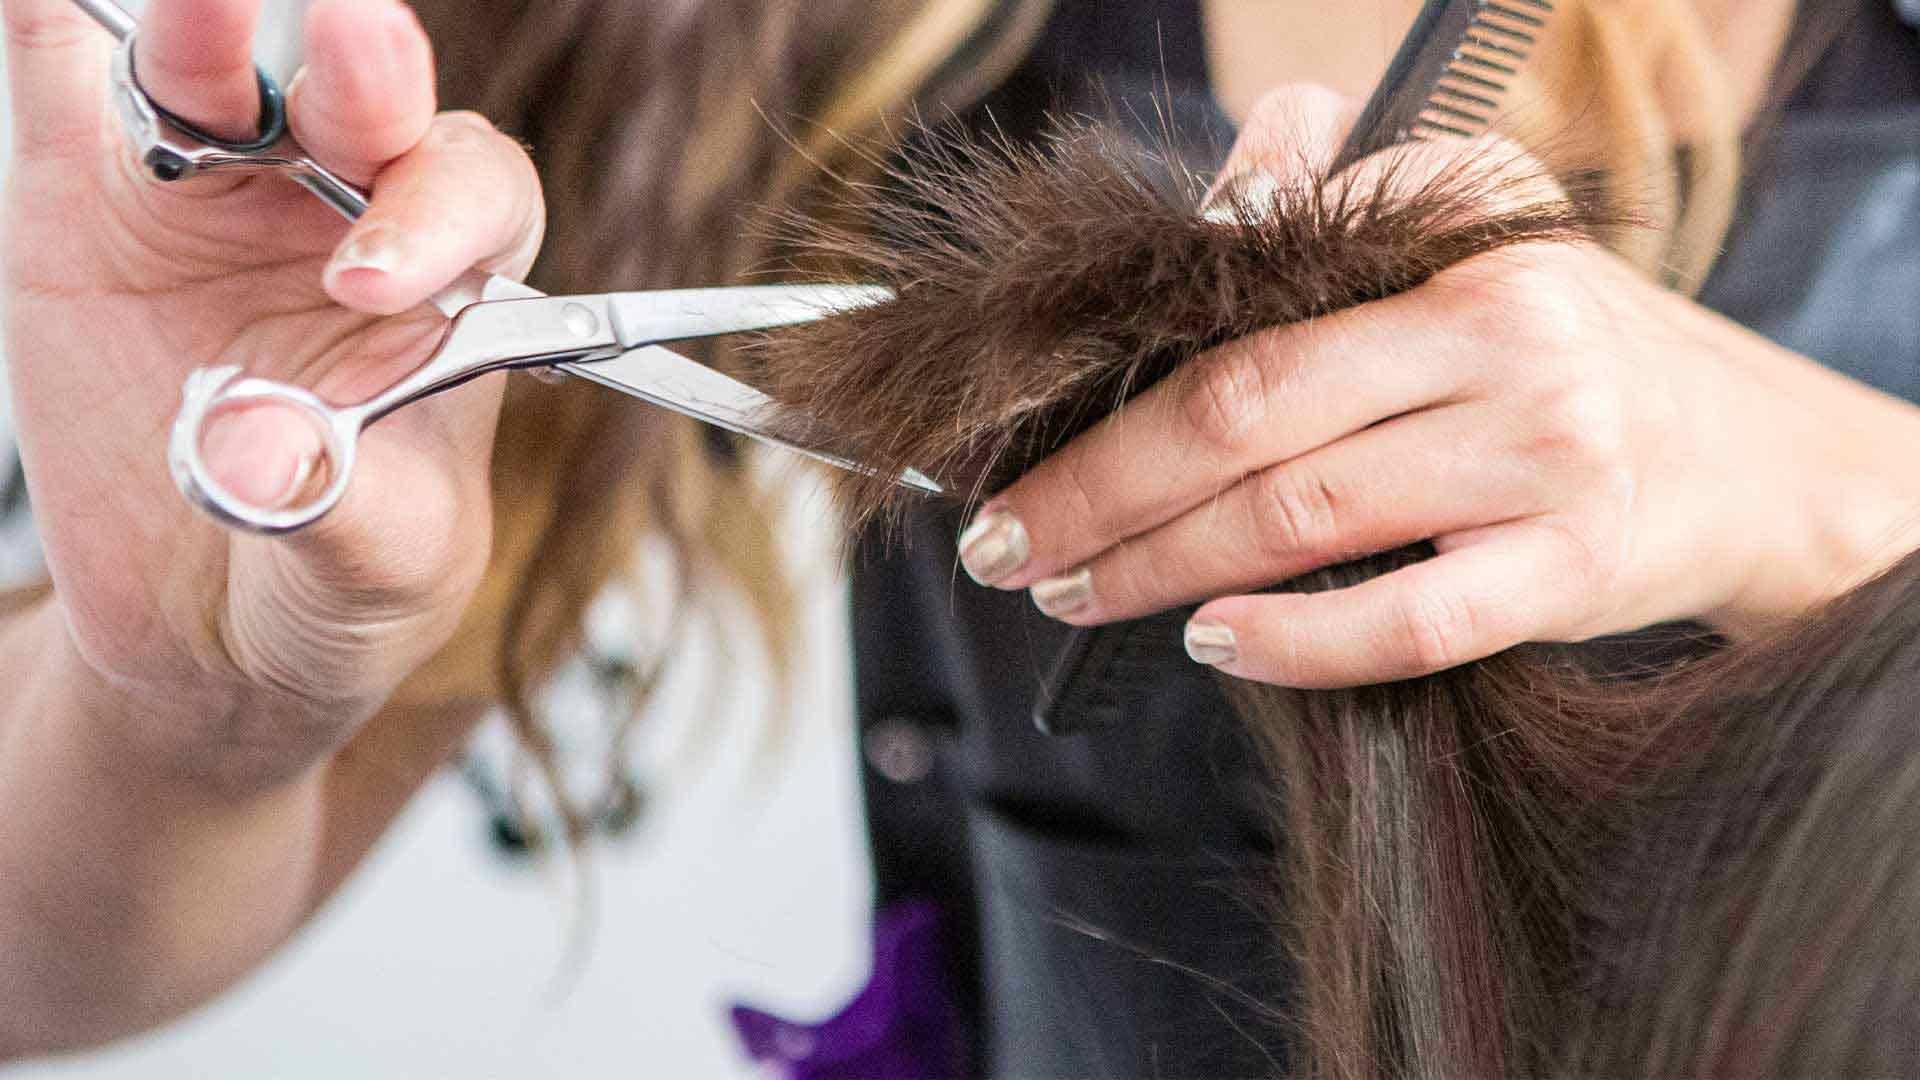 Step cutting for long hair